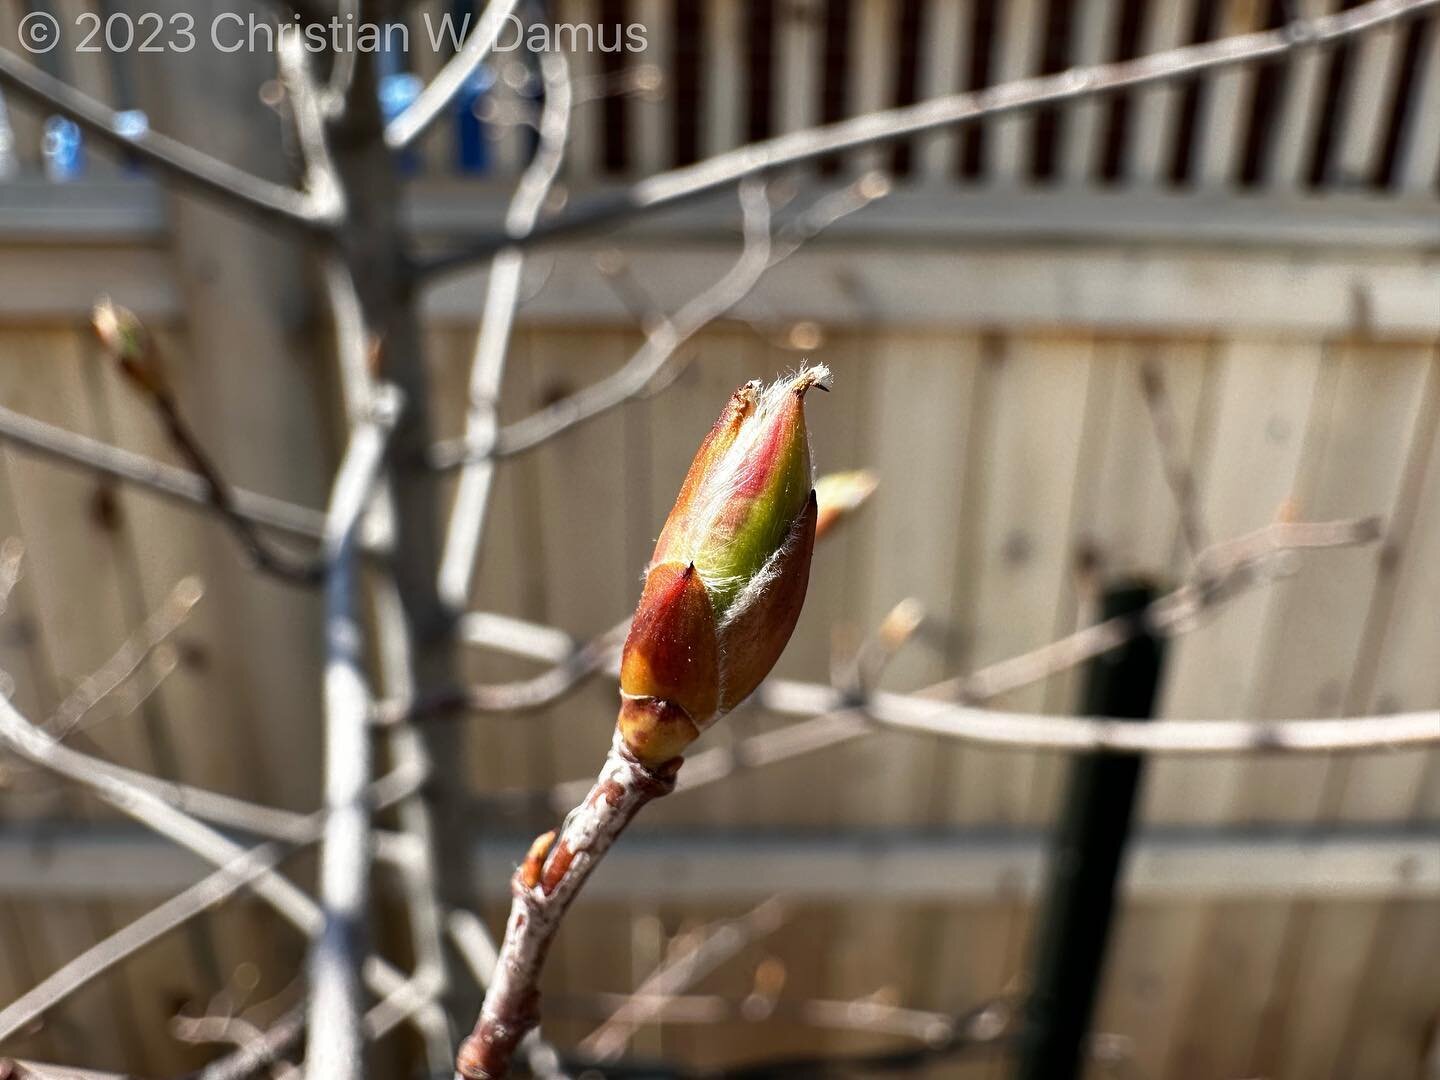 Now this looks like #spring. Leaf bud on the serviceberry tree.

#nofilter #nature #tree #leaf #bud #naturegram